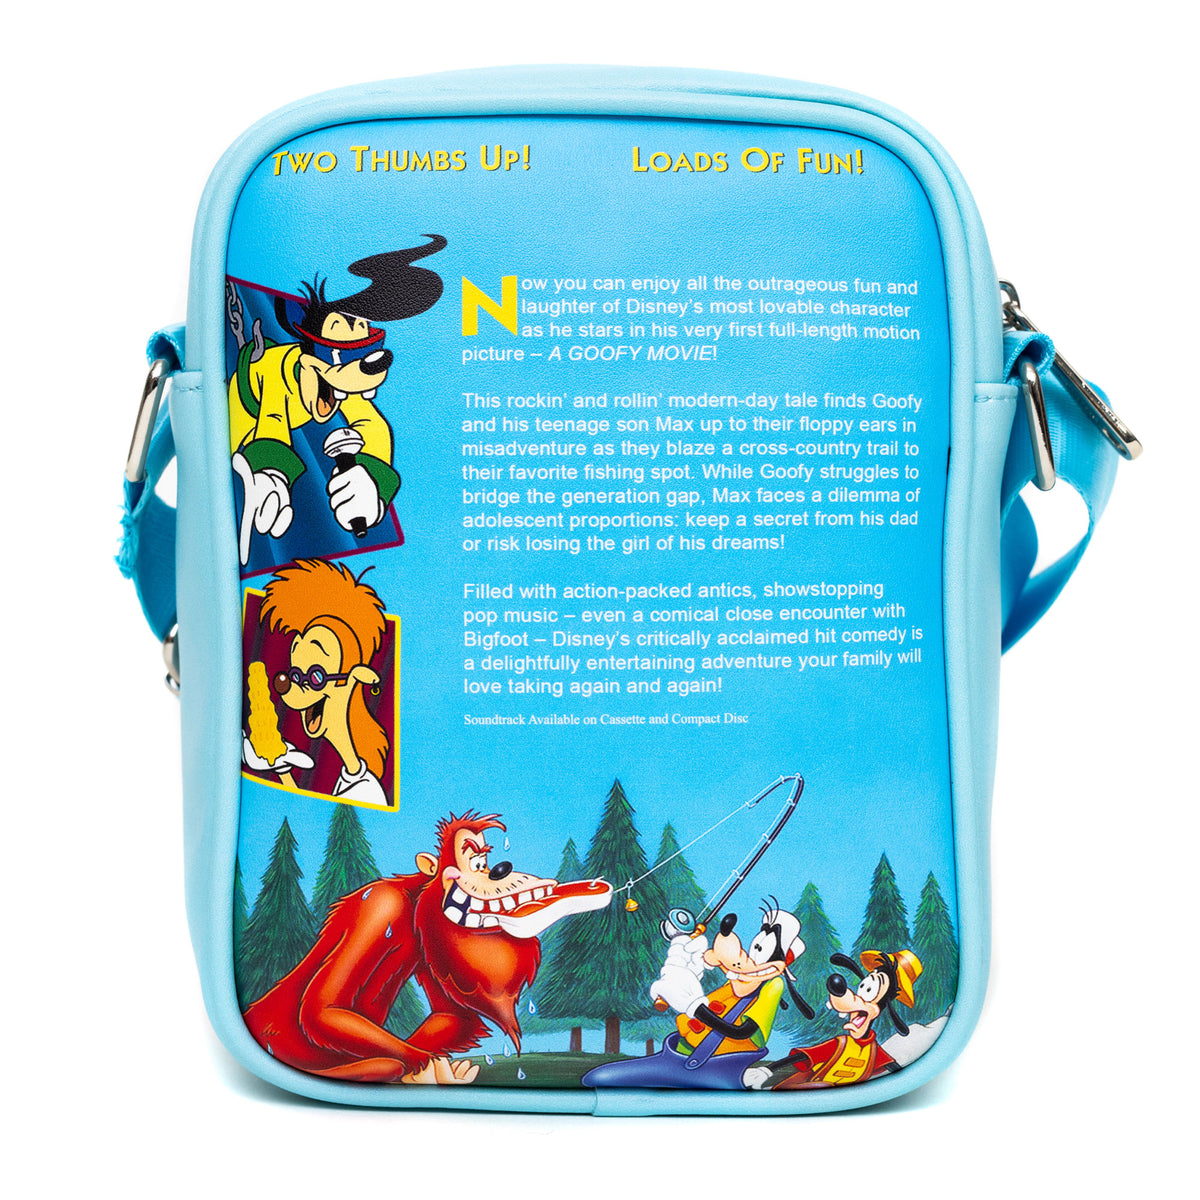 Disney VHS Collection A Goofy Movie Crossbody Bag